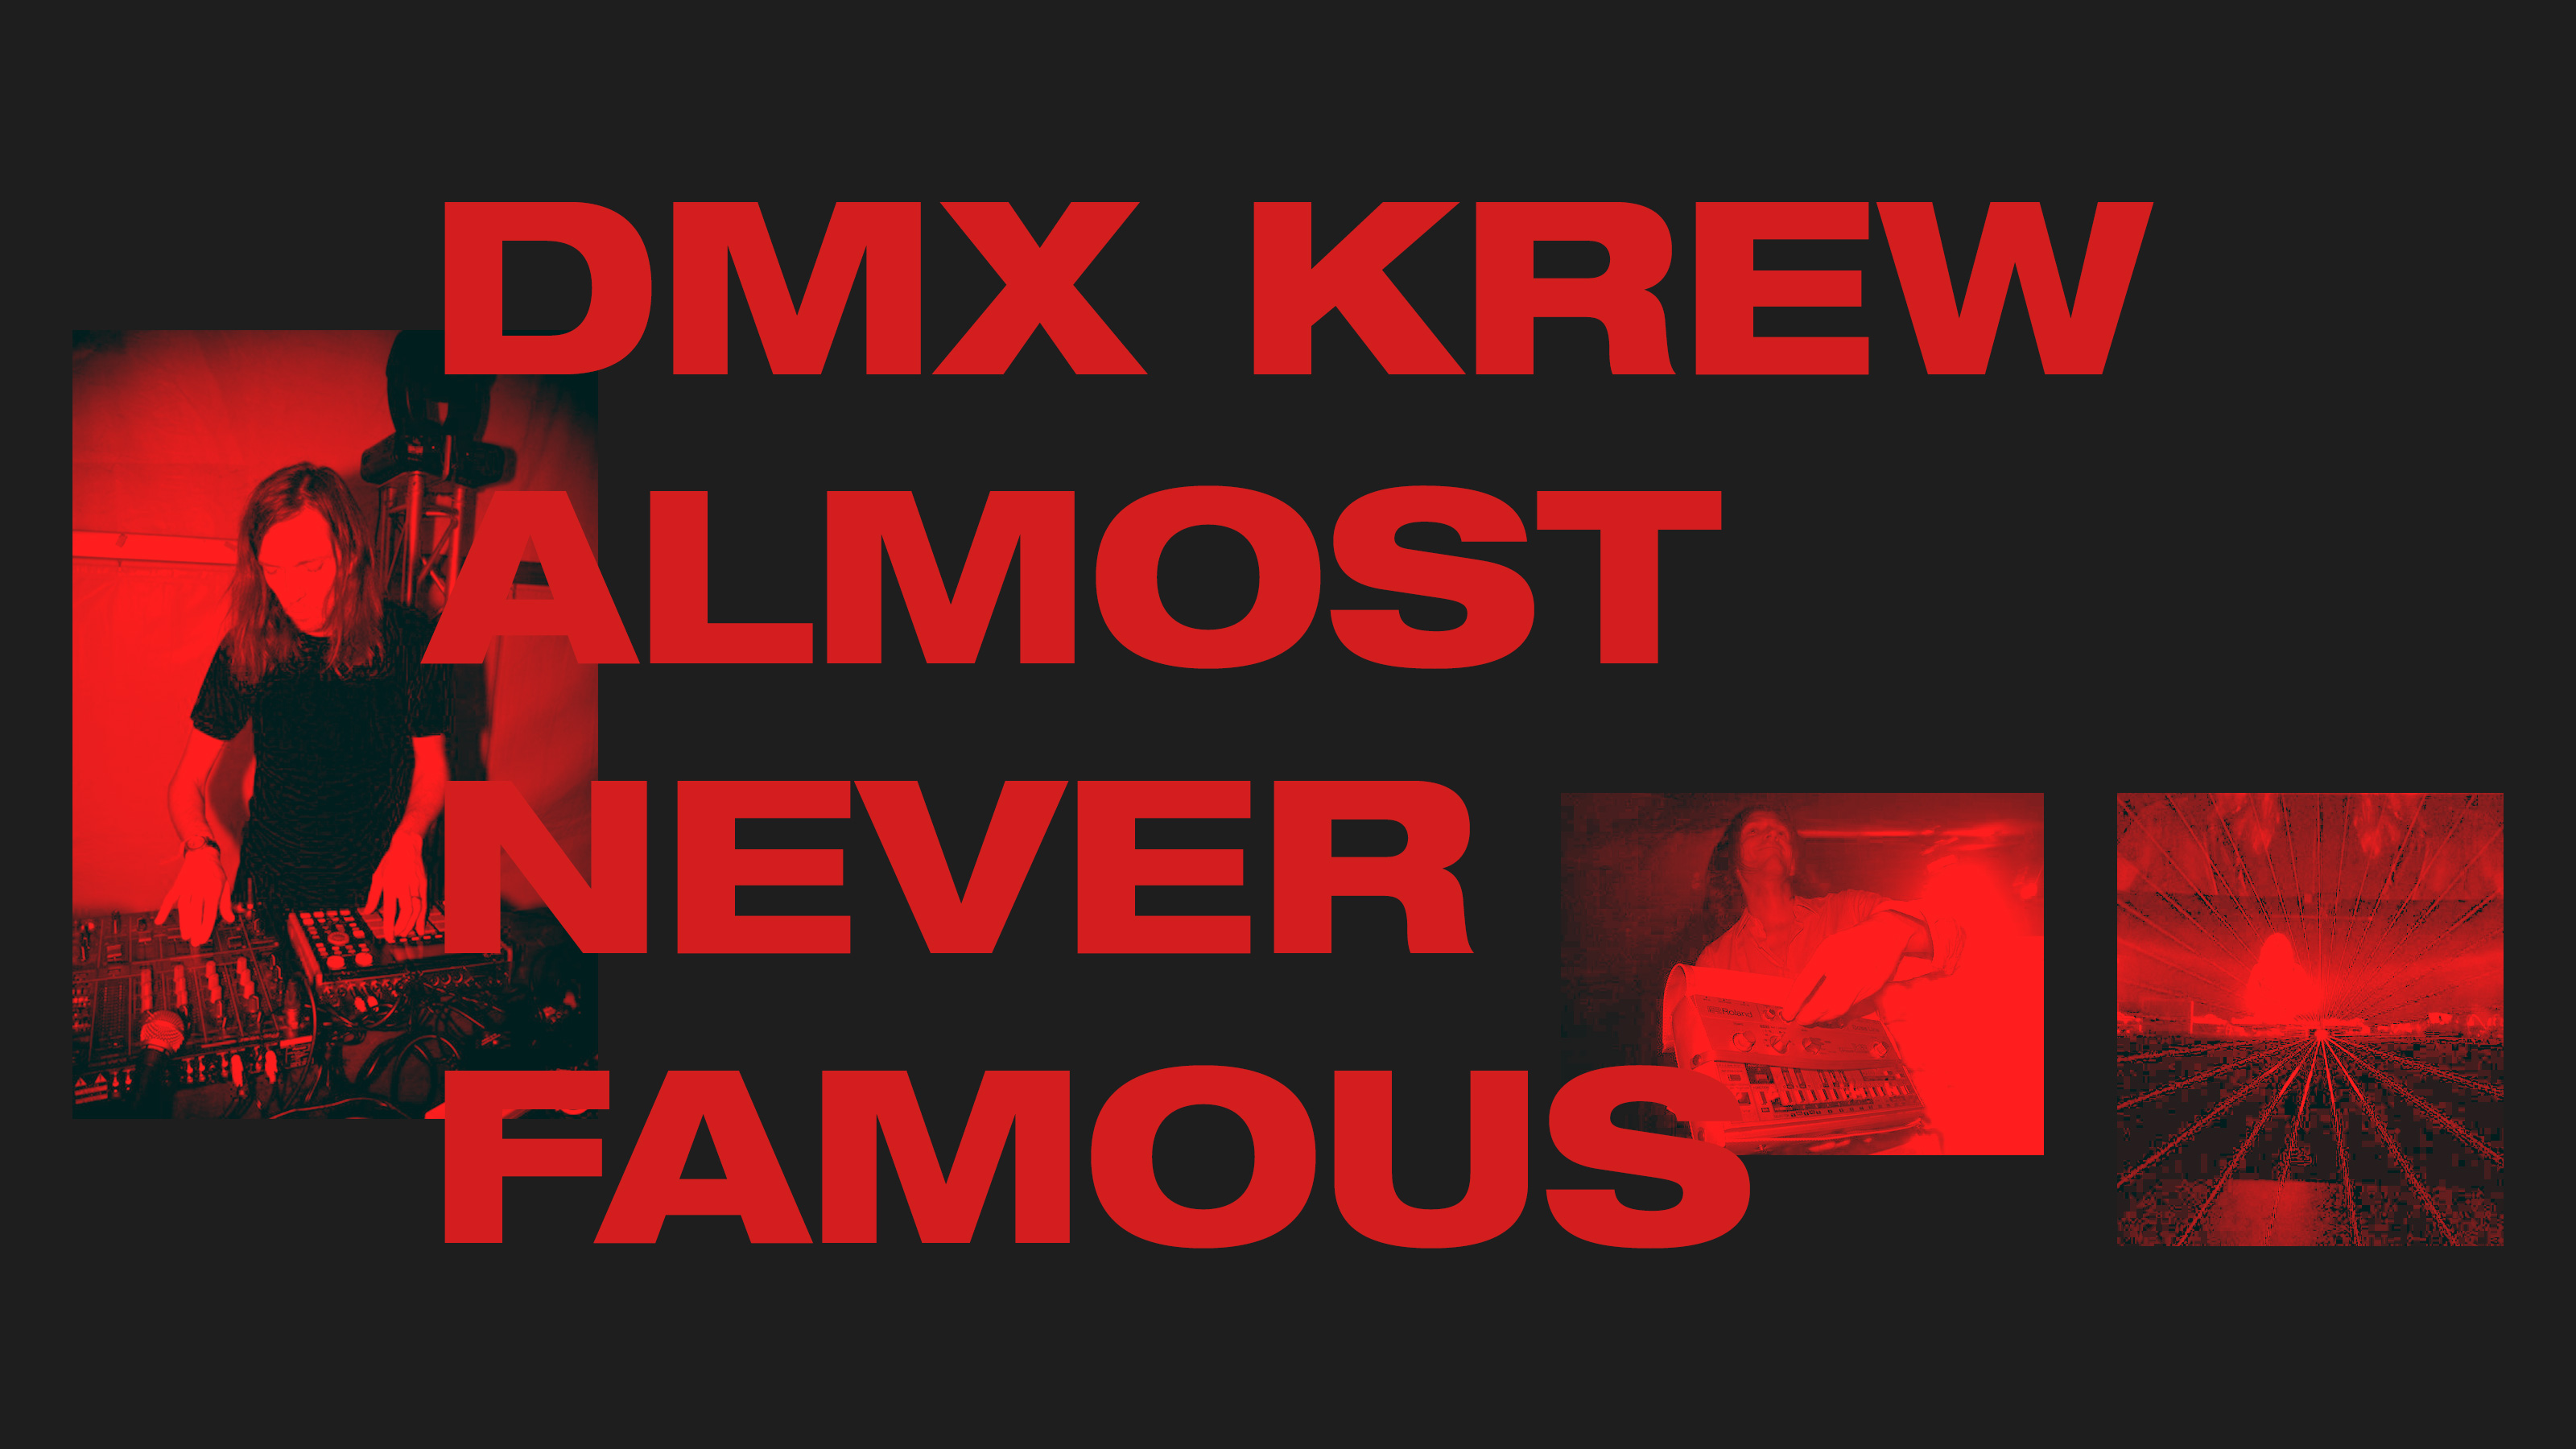 DMX Krew: Almost never famous